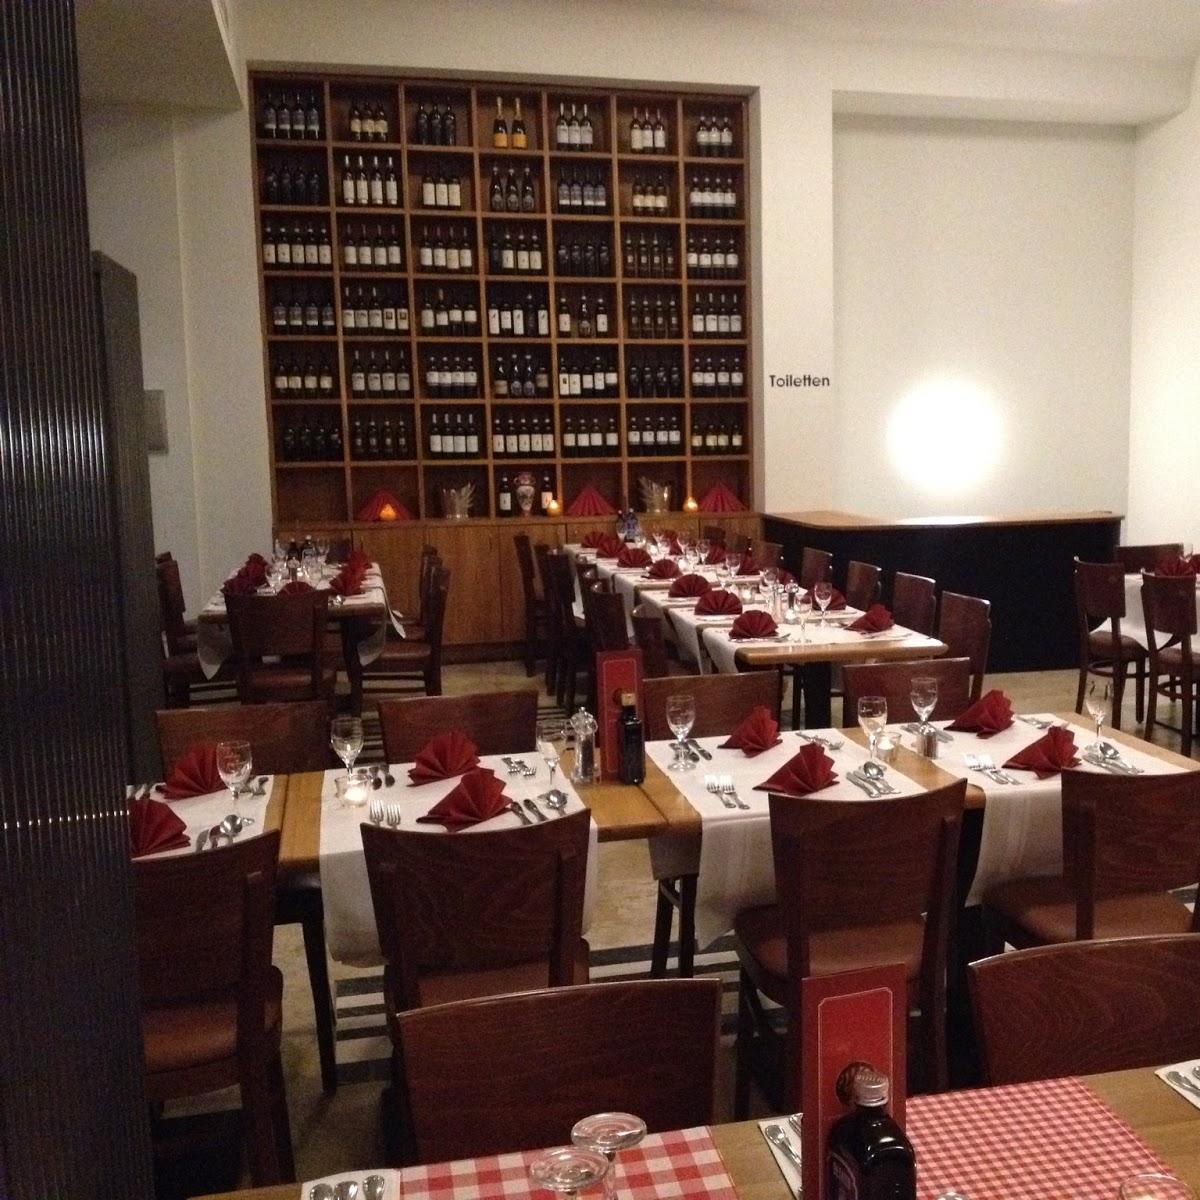 Restaurant "Trattoria Ossena" in Berlin